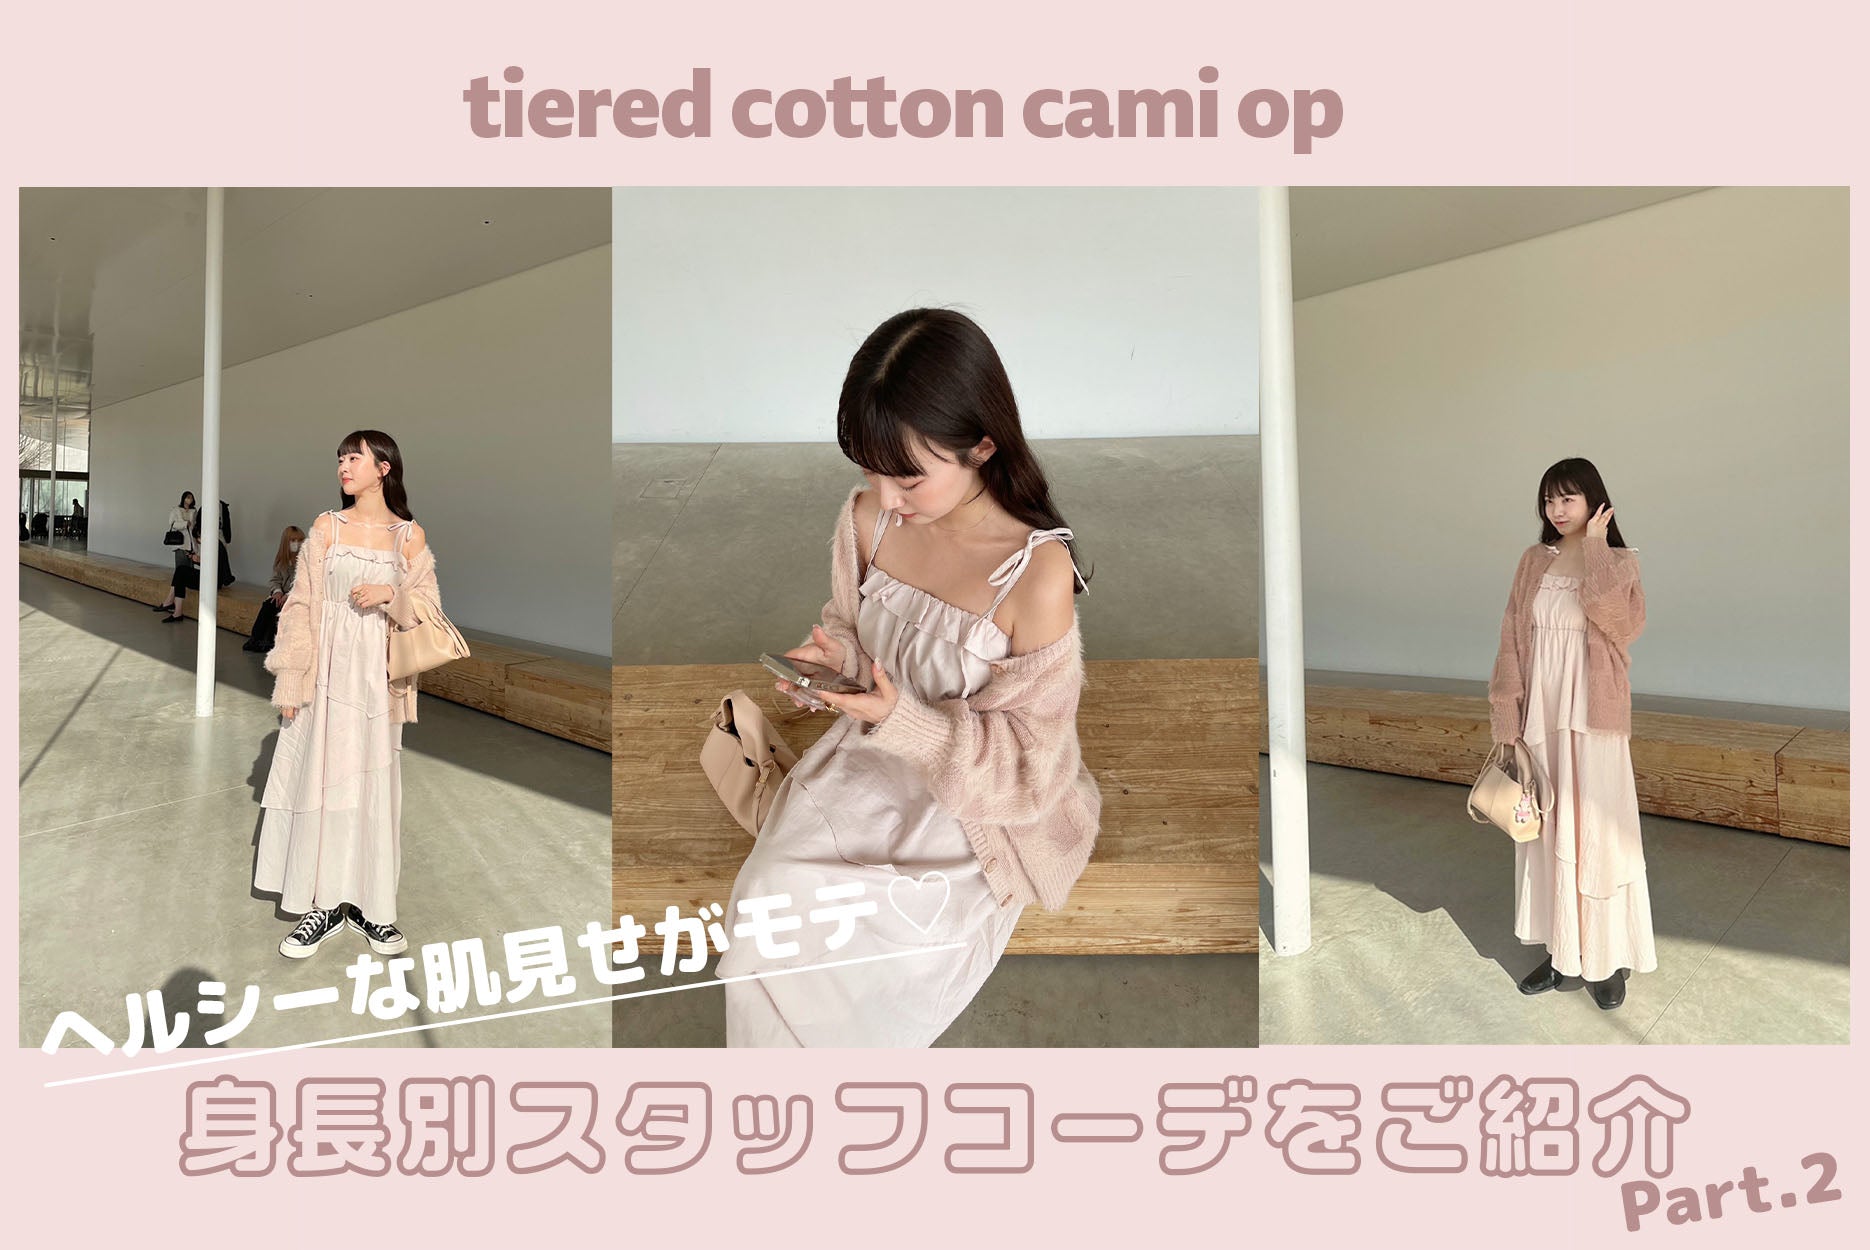 muguet / ミュゲ】tiered cotton cami op 身長別スタッフコーデ